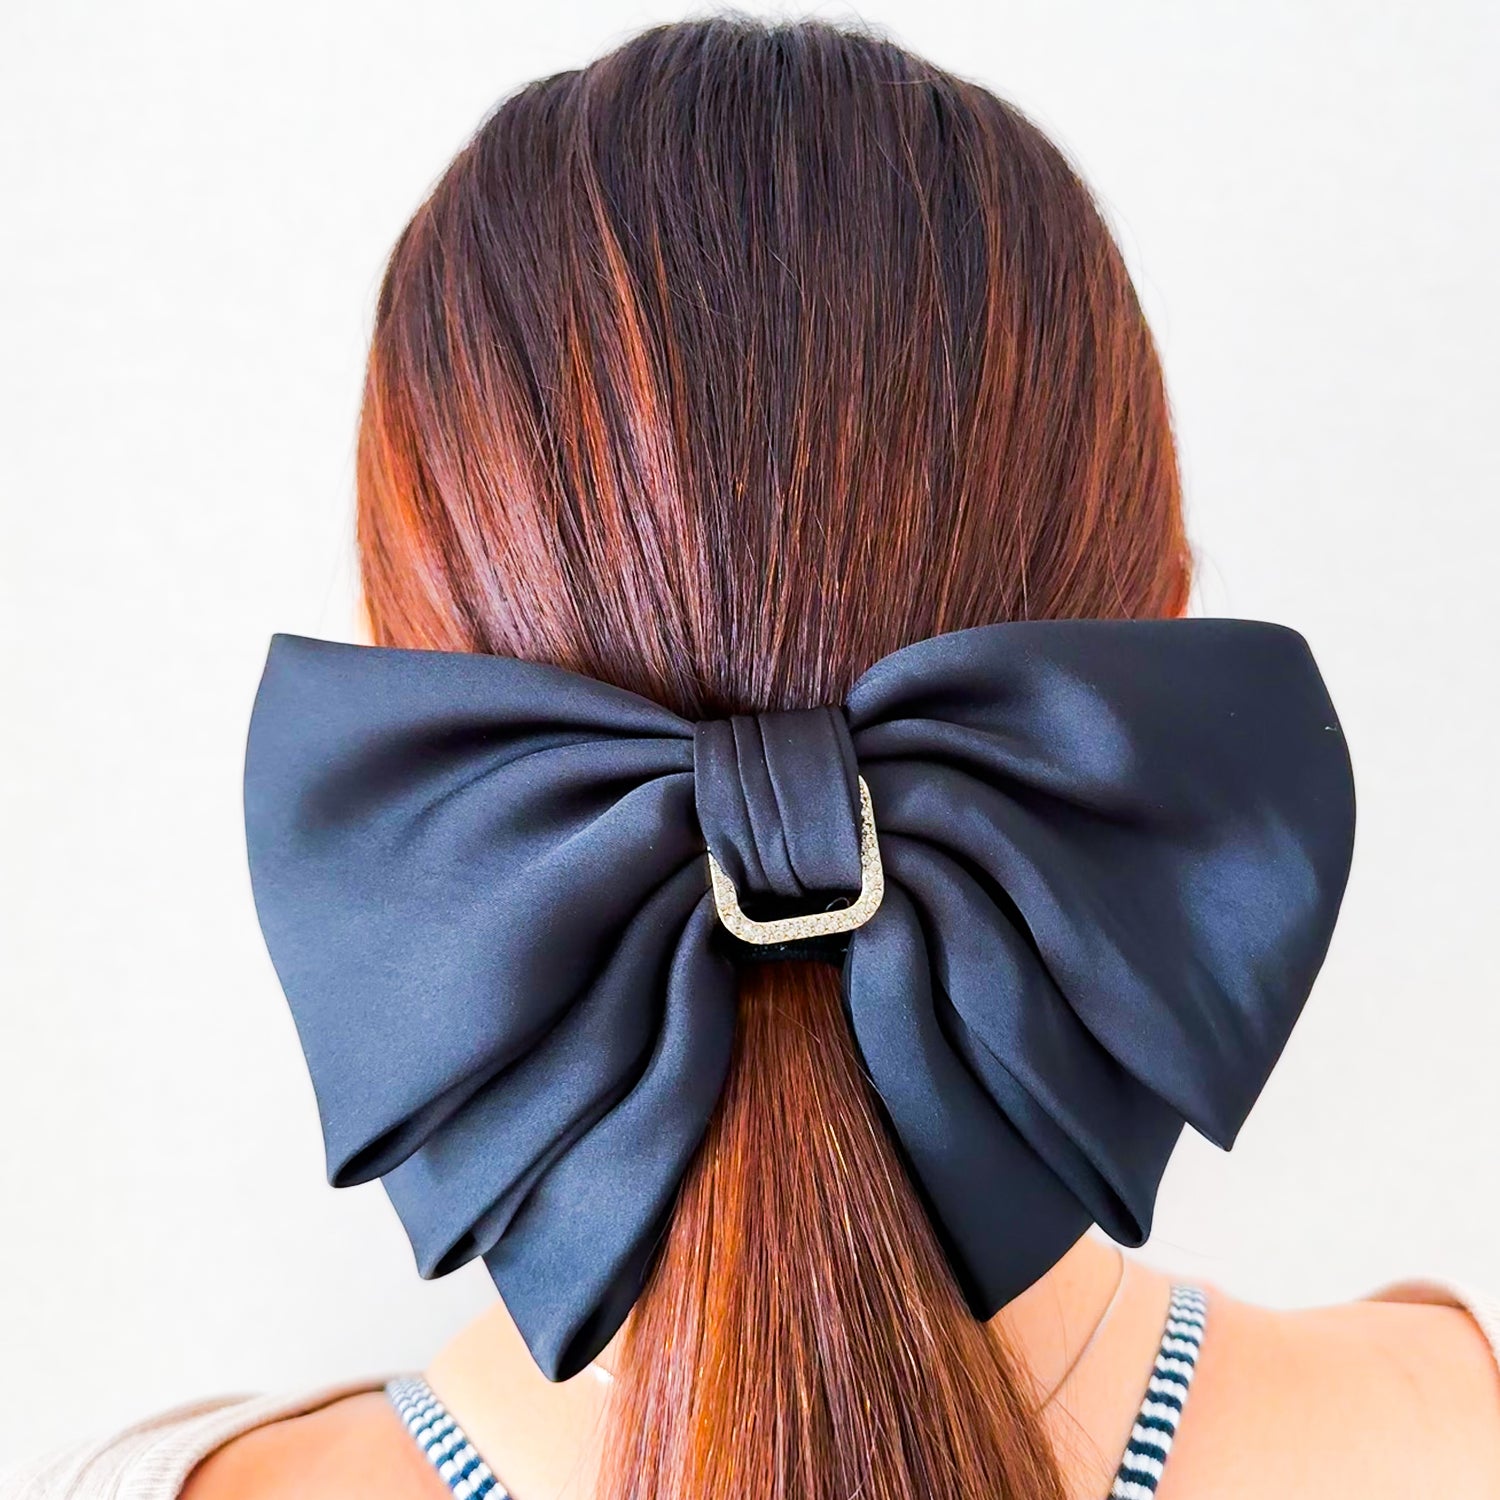 Bow Hair Clips - Silky Three Layers with Shiny Stones